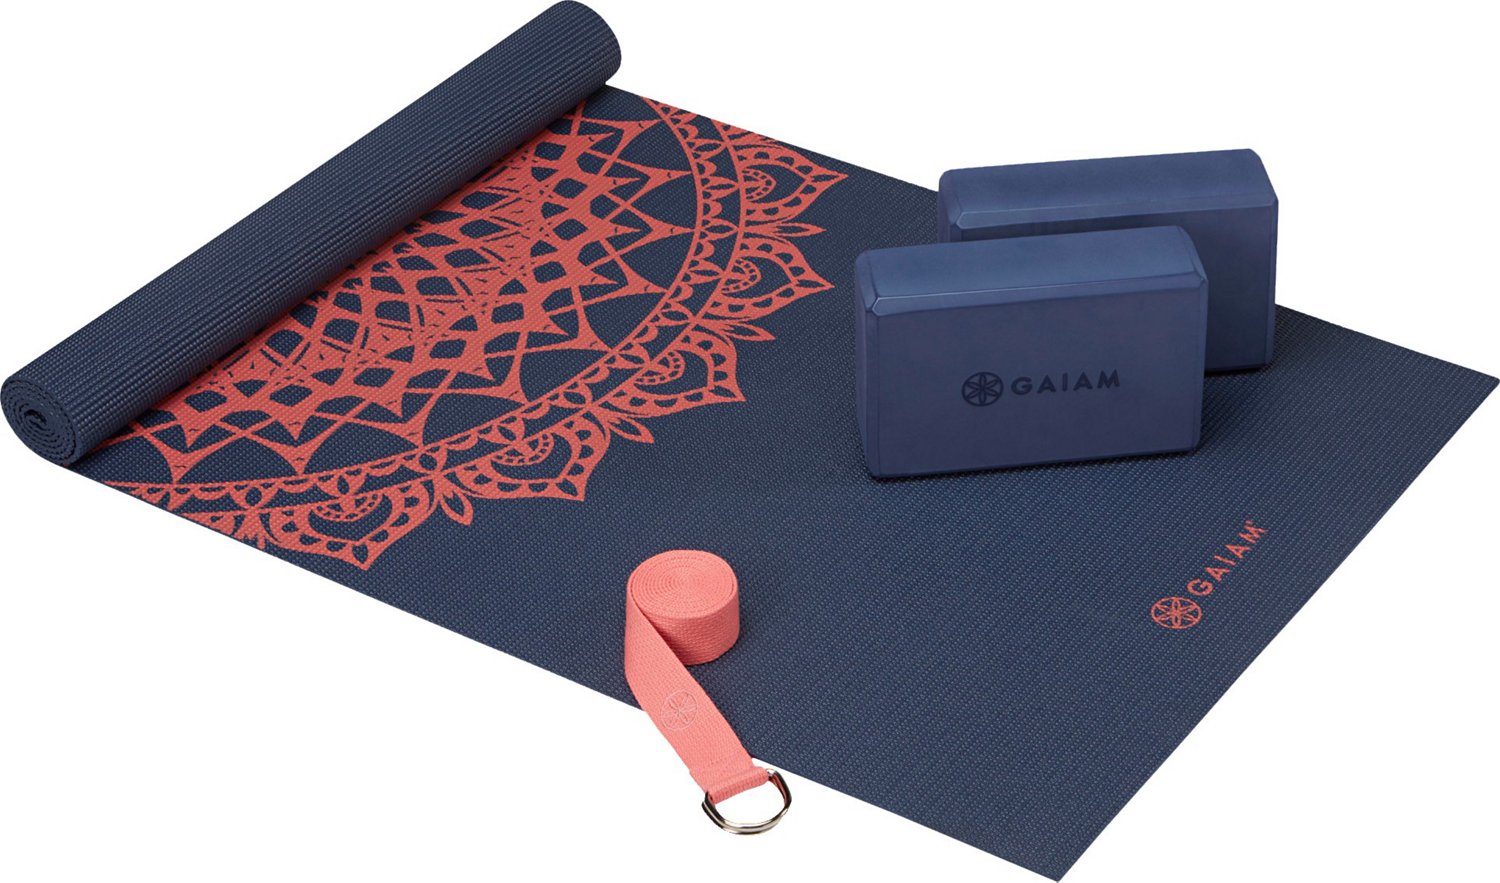 Gaiam Yoga Beginners Kit (VARIETY OF COLOR)